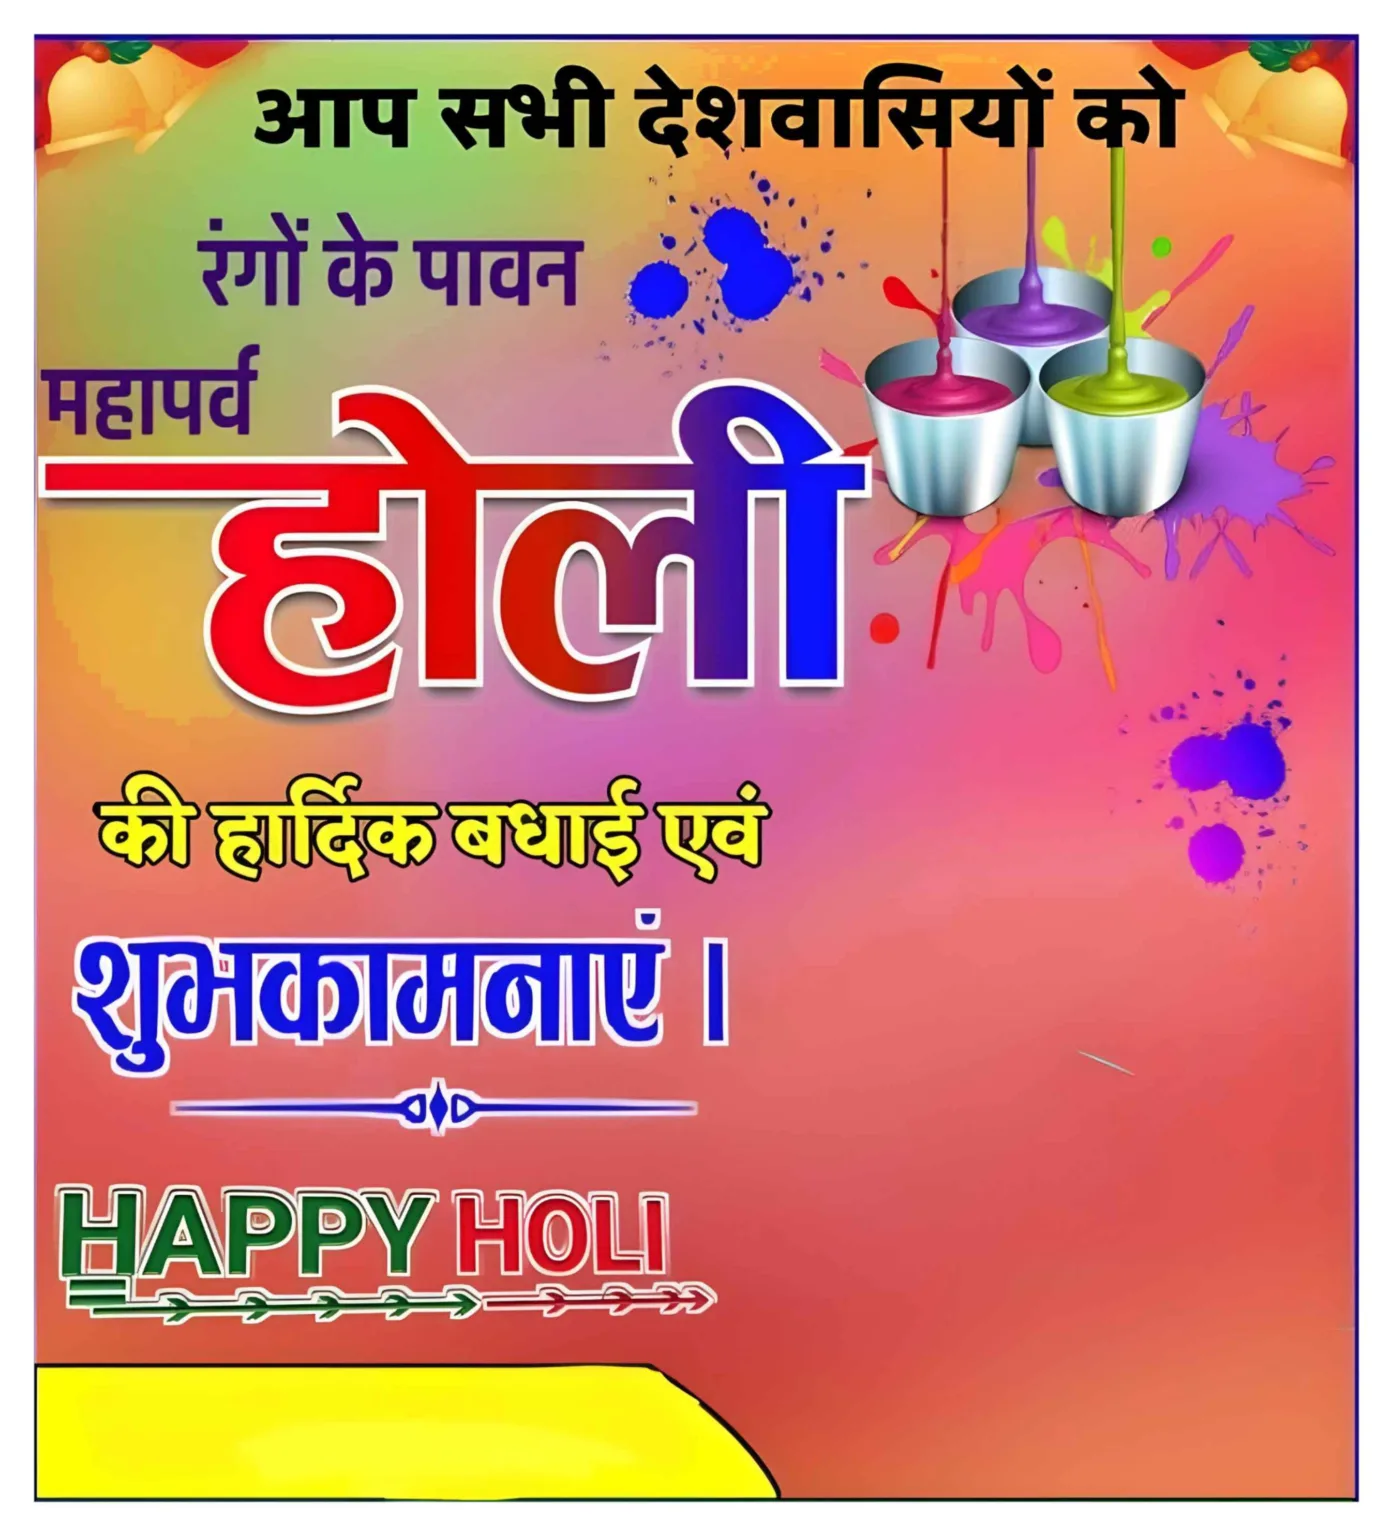 Holi ka photo banner background for wishes in Hindi